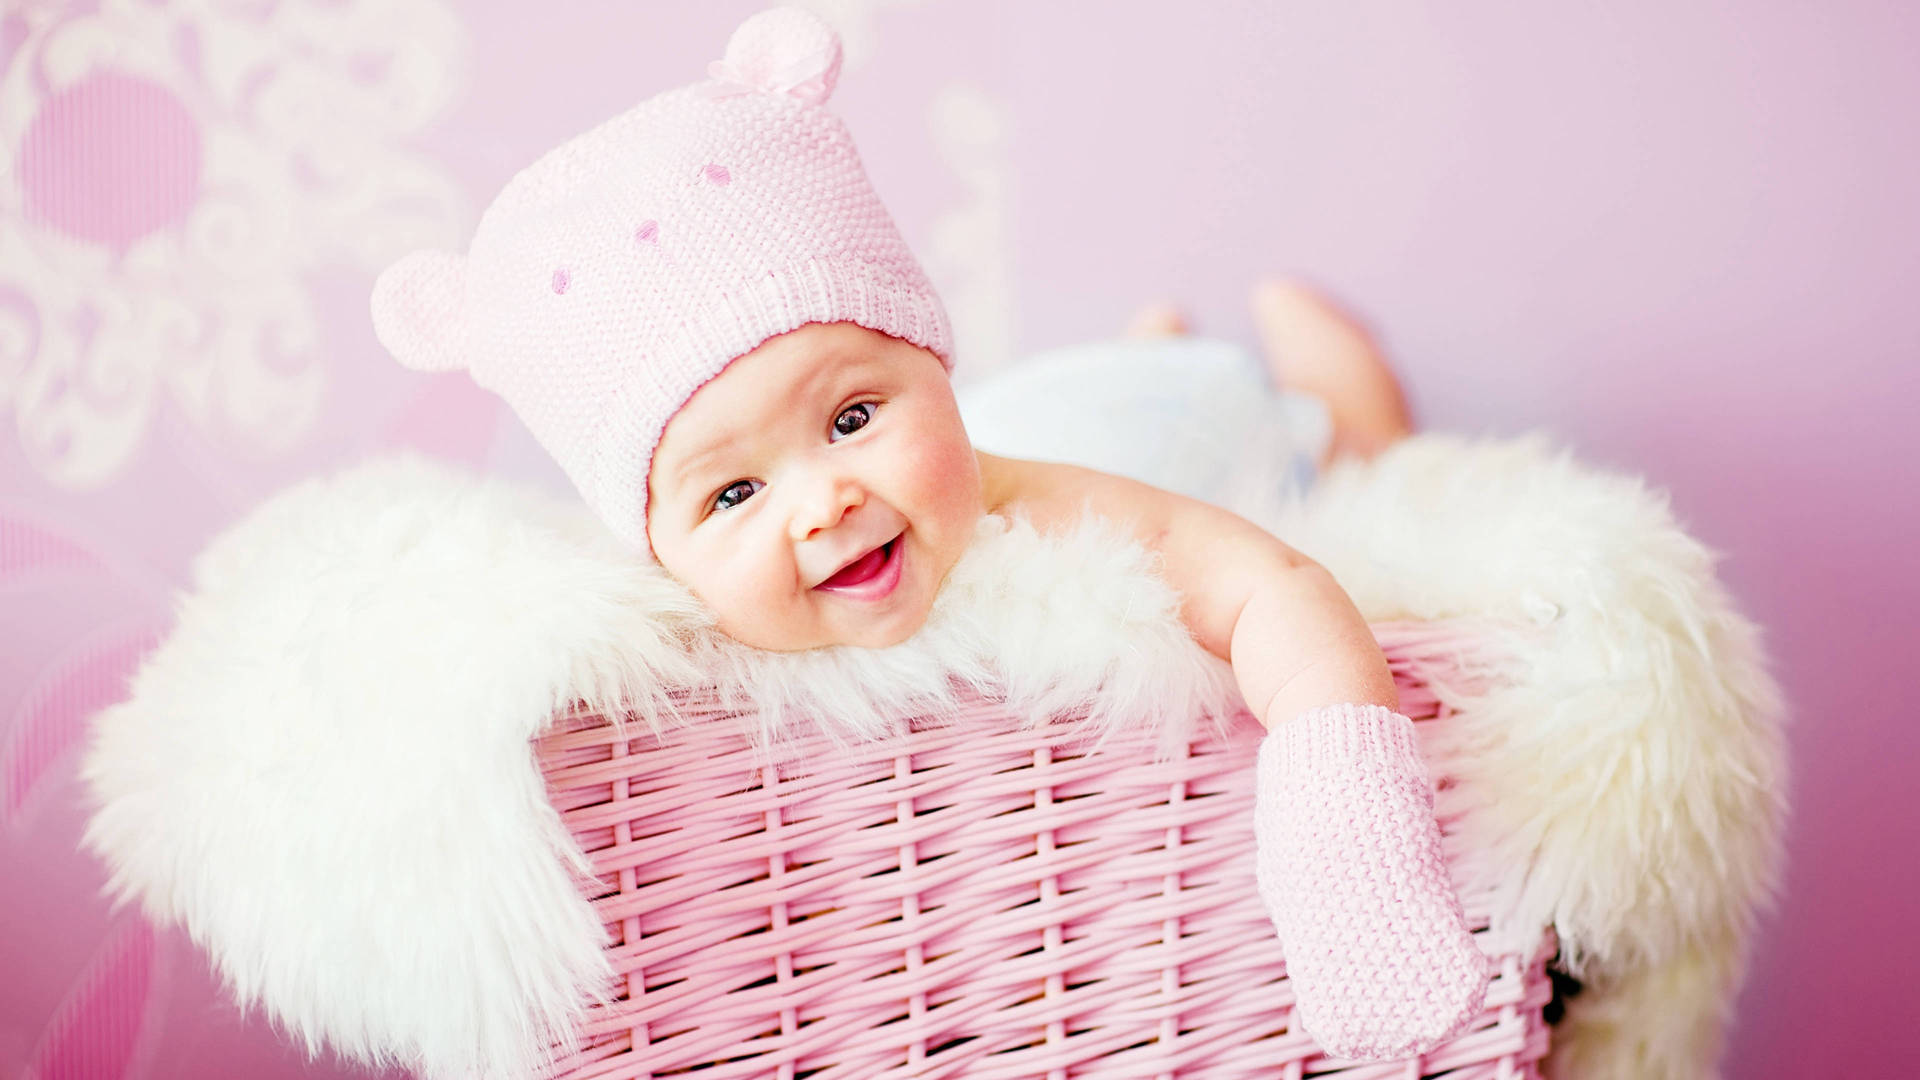 Cherubic Smile of Innocence - Adorable Baby Girl Wallpaper